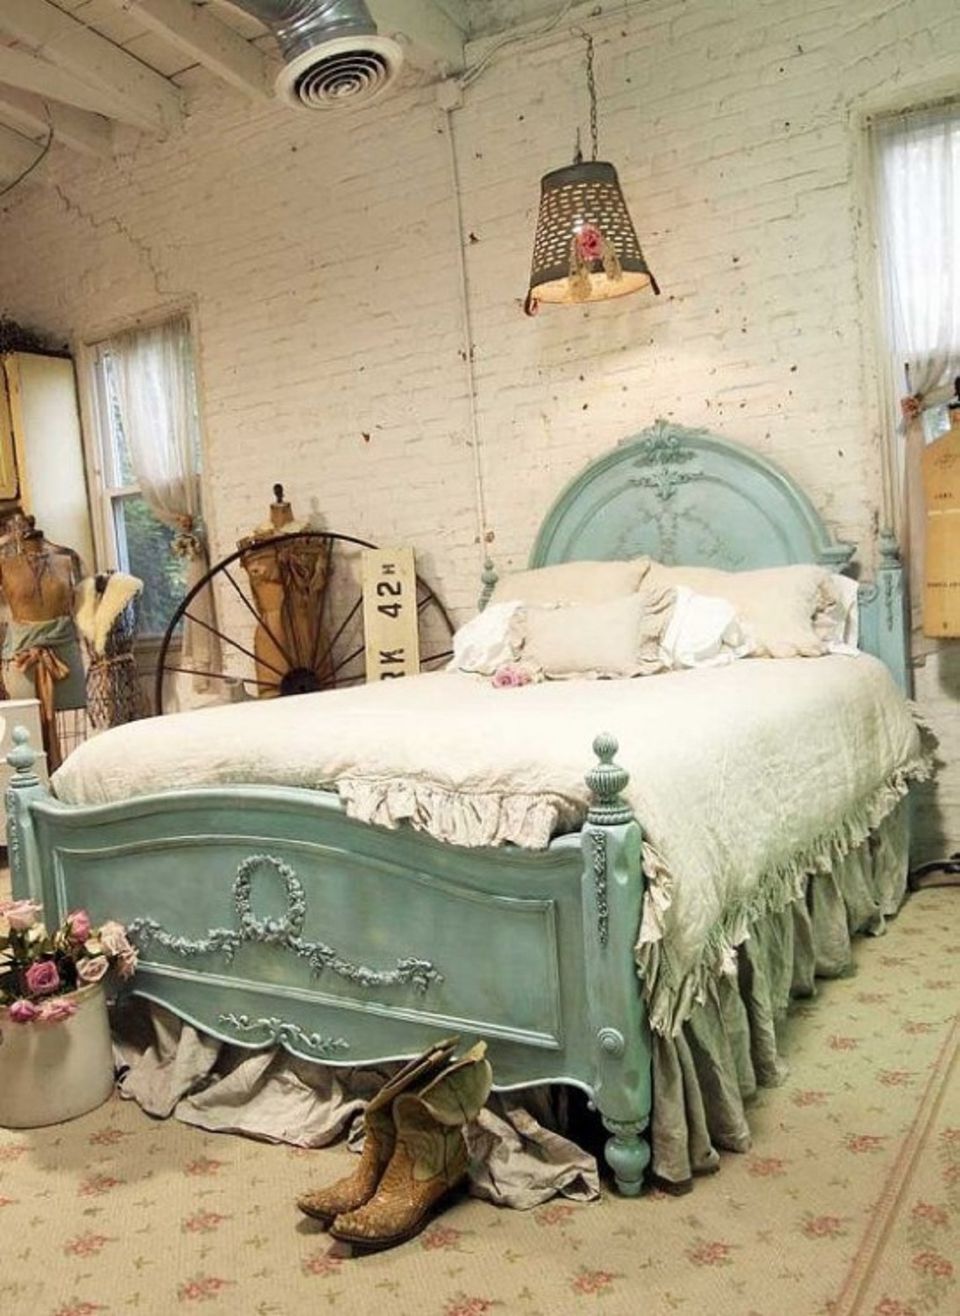 D:\KONTENESIA\job 7\6 Bedroom Ideas for Woman\Vintage Concept for bedroom interior - thespruce.com.jpg